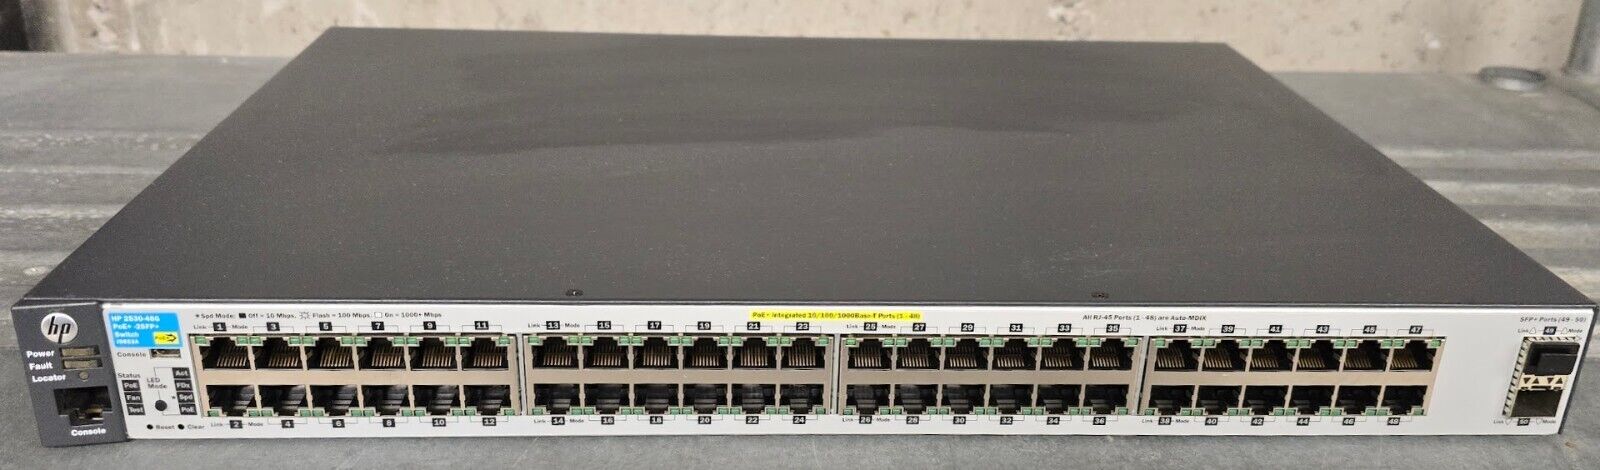 HP J9853A ProCurve 2530-48G PoE+ 2x SFP Switch (Tested & Working)